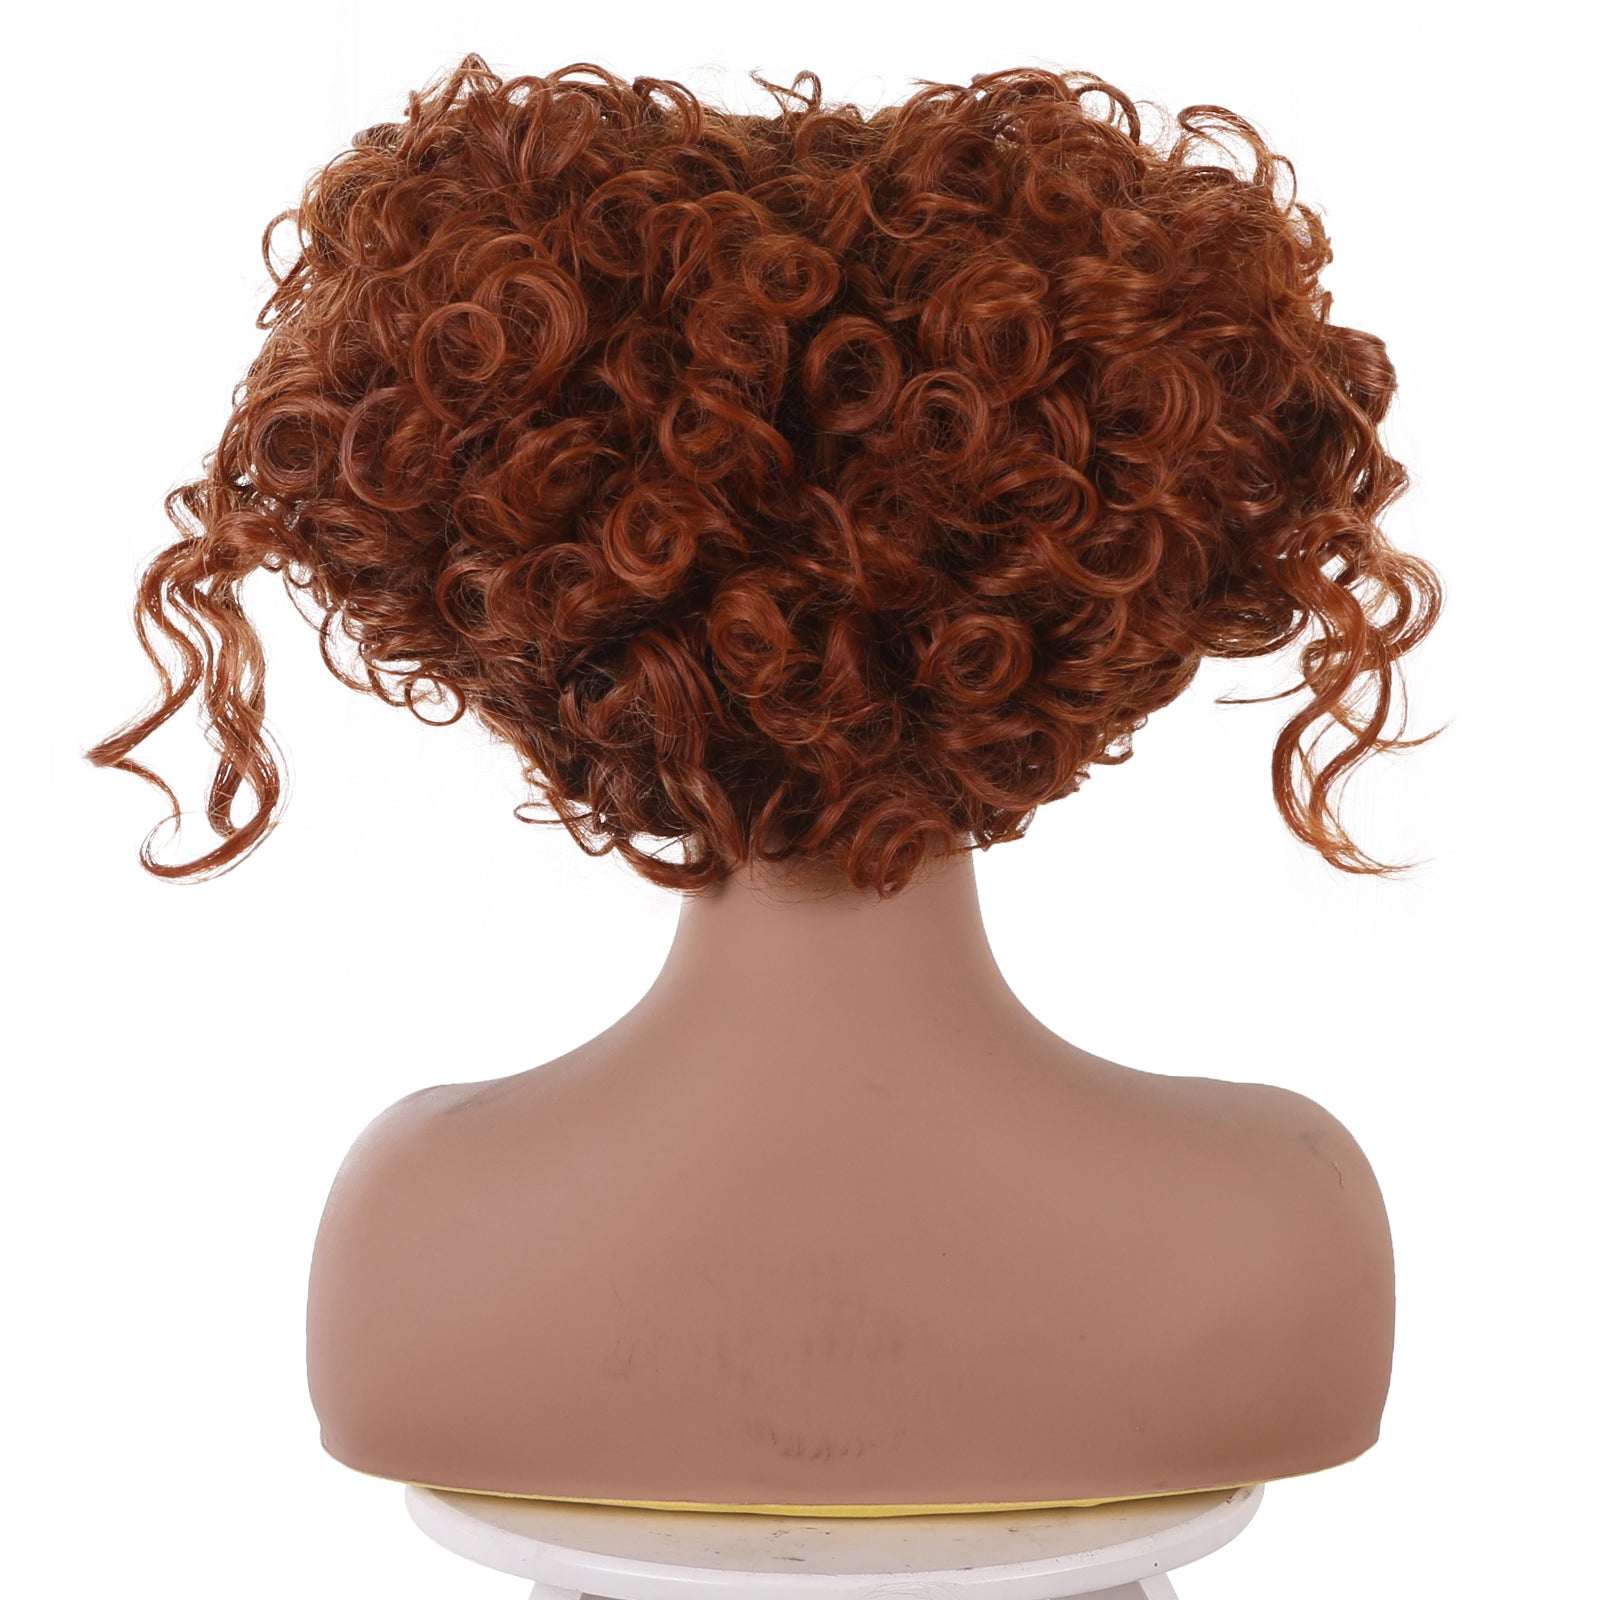 Rulercosplay Hocus Pocus 2 Winifred Sanderson heart-shaped Brown short Movie Cosplay Halloween cosplay Wig Special Wig